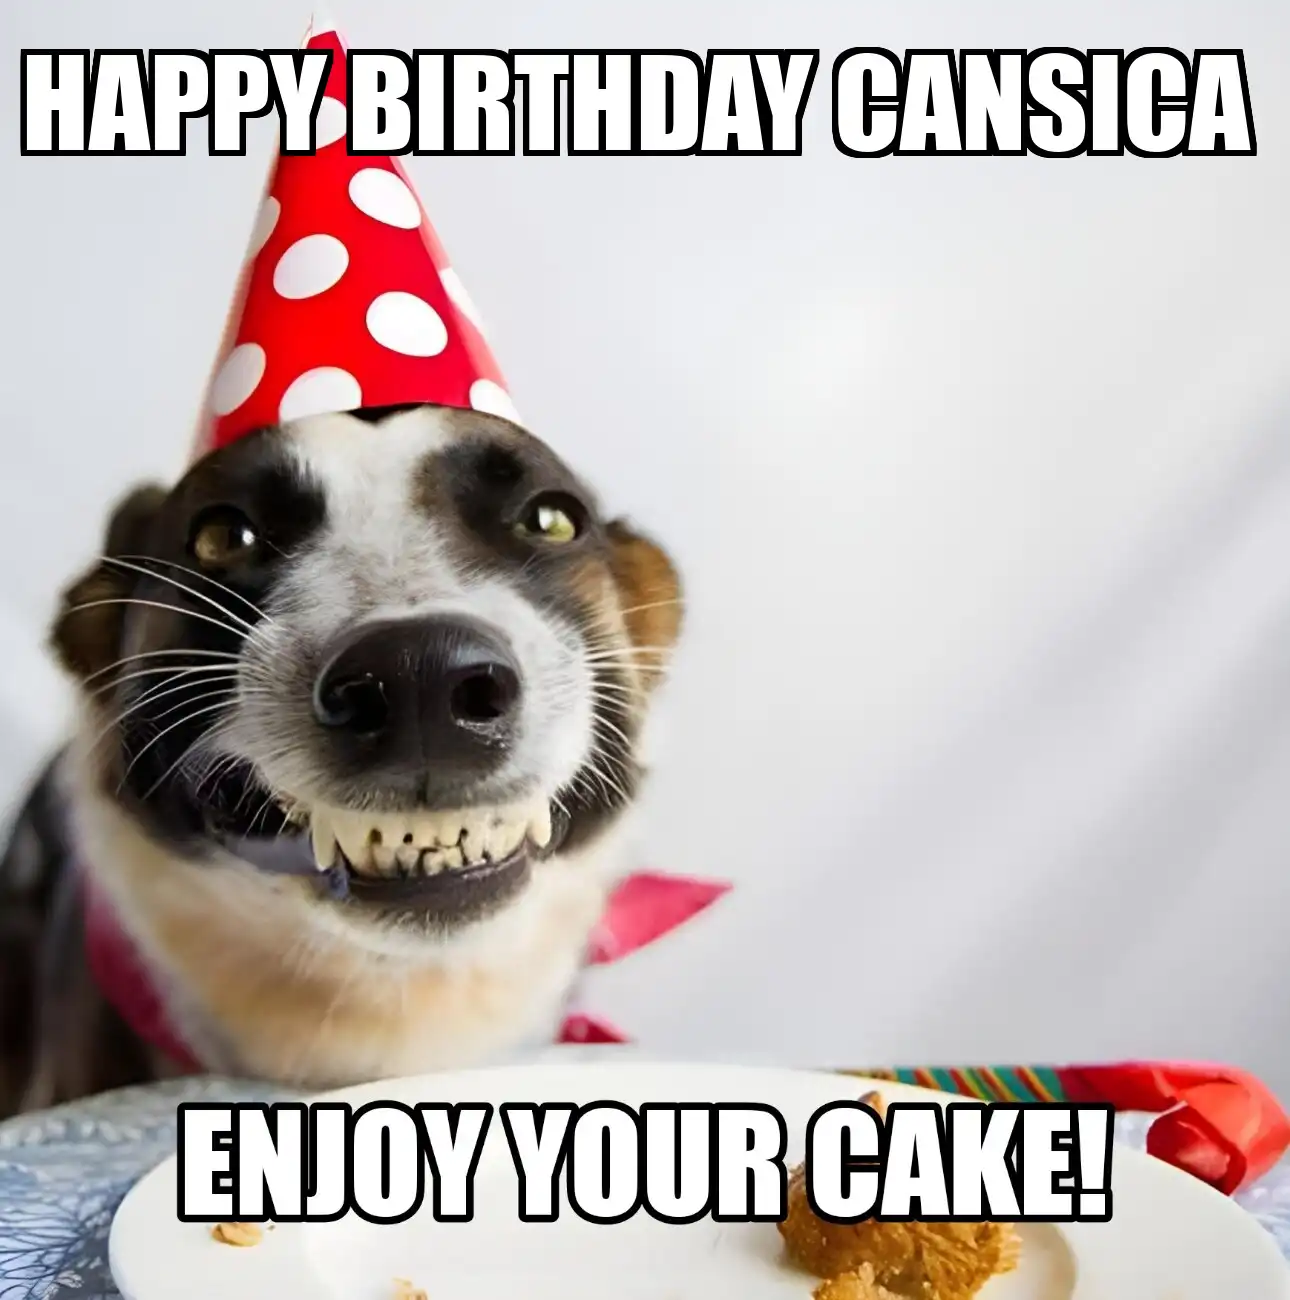 Happy Birthday Cansica Enjoy Your Cake Dog Meme